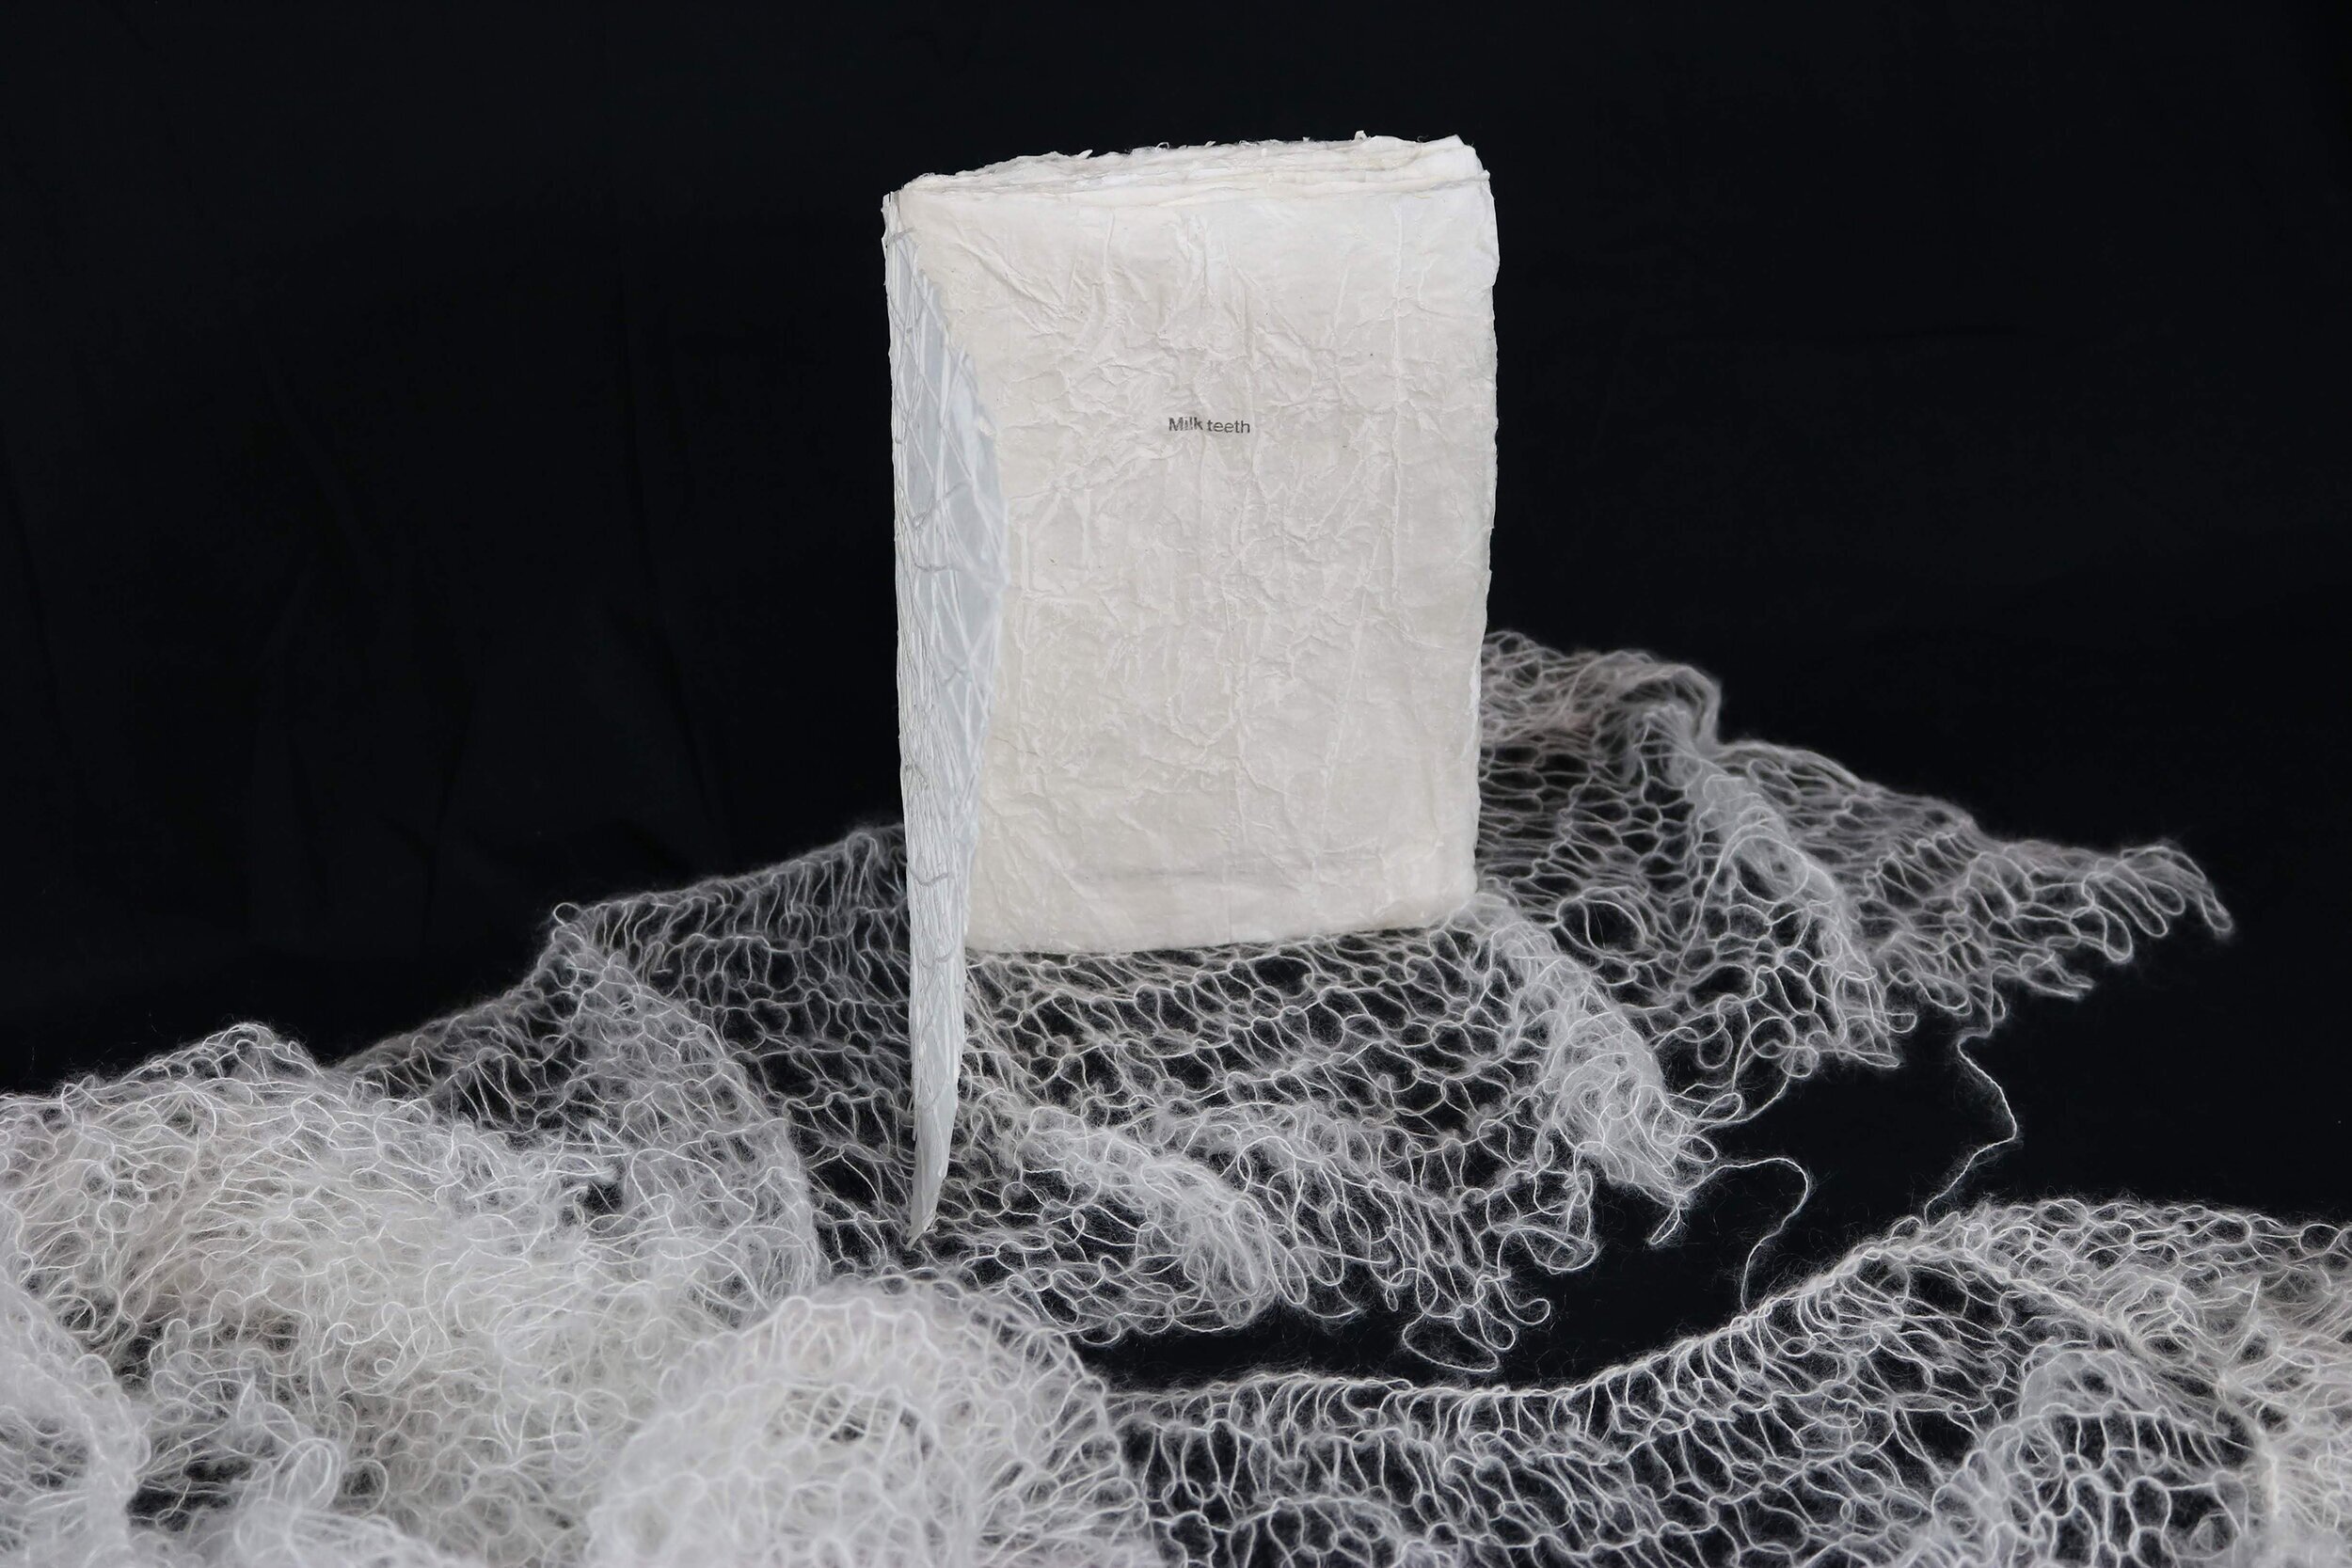    Milk teeth , 2019, handmade kozo paper, transfers, gouache, embroidery, knit wrap, 12”x9”x3” closed   